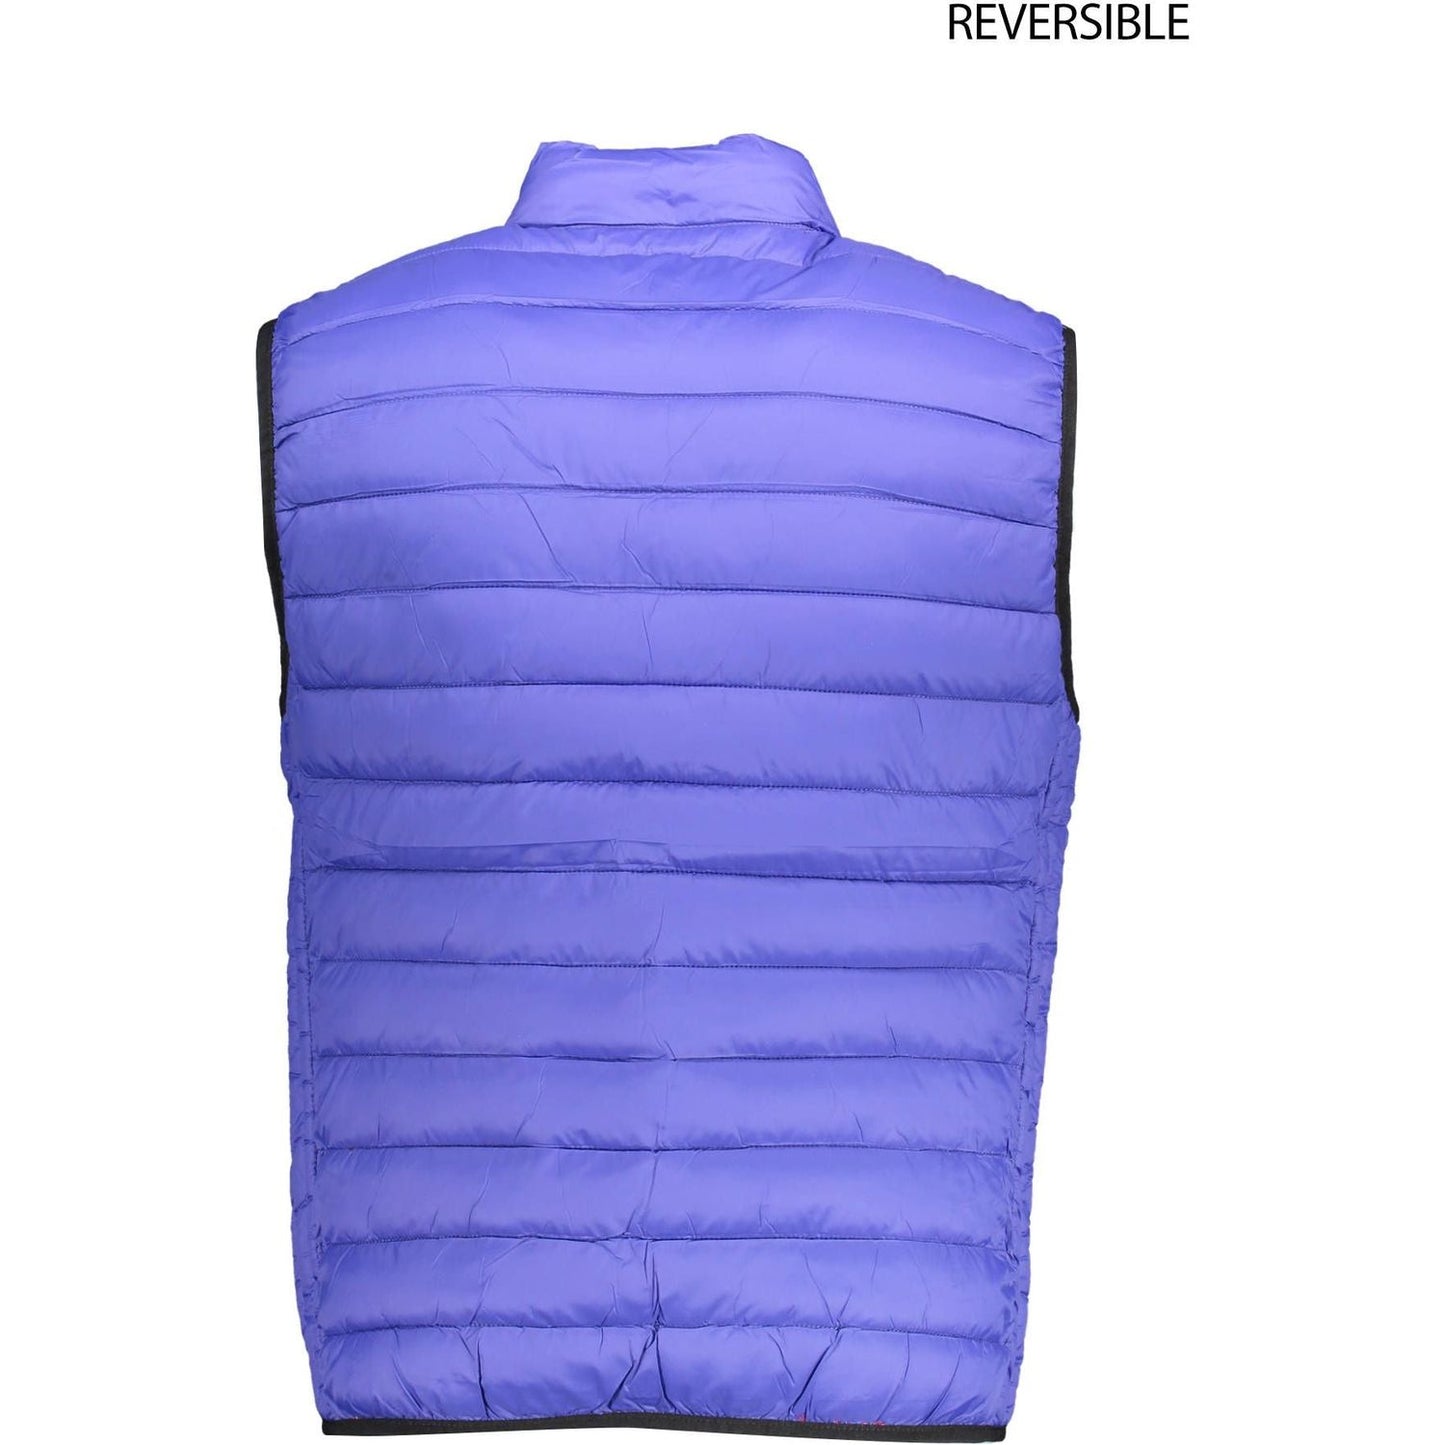 U.S. POLO ASSN. Sleek Reversible Sleeveless Jacket sleek-reversible-sleeveless-jacket